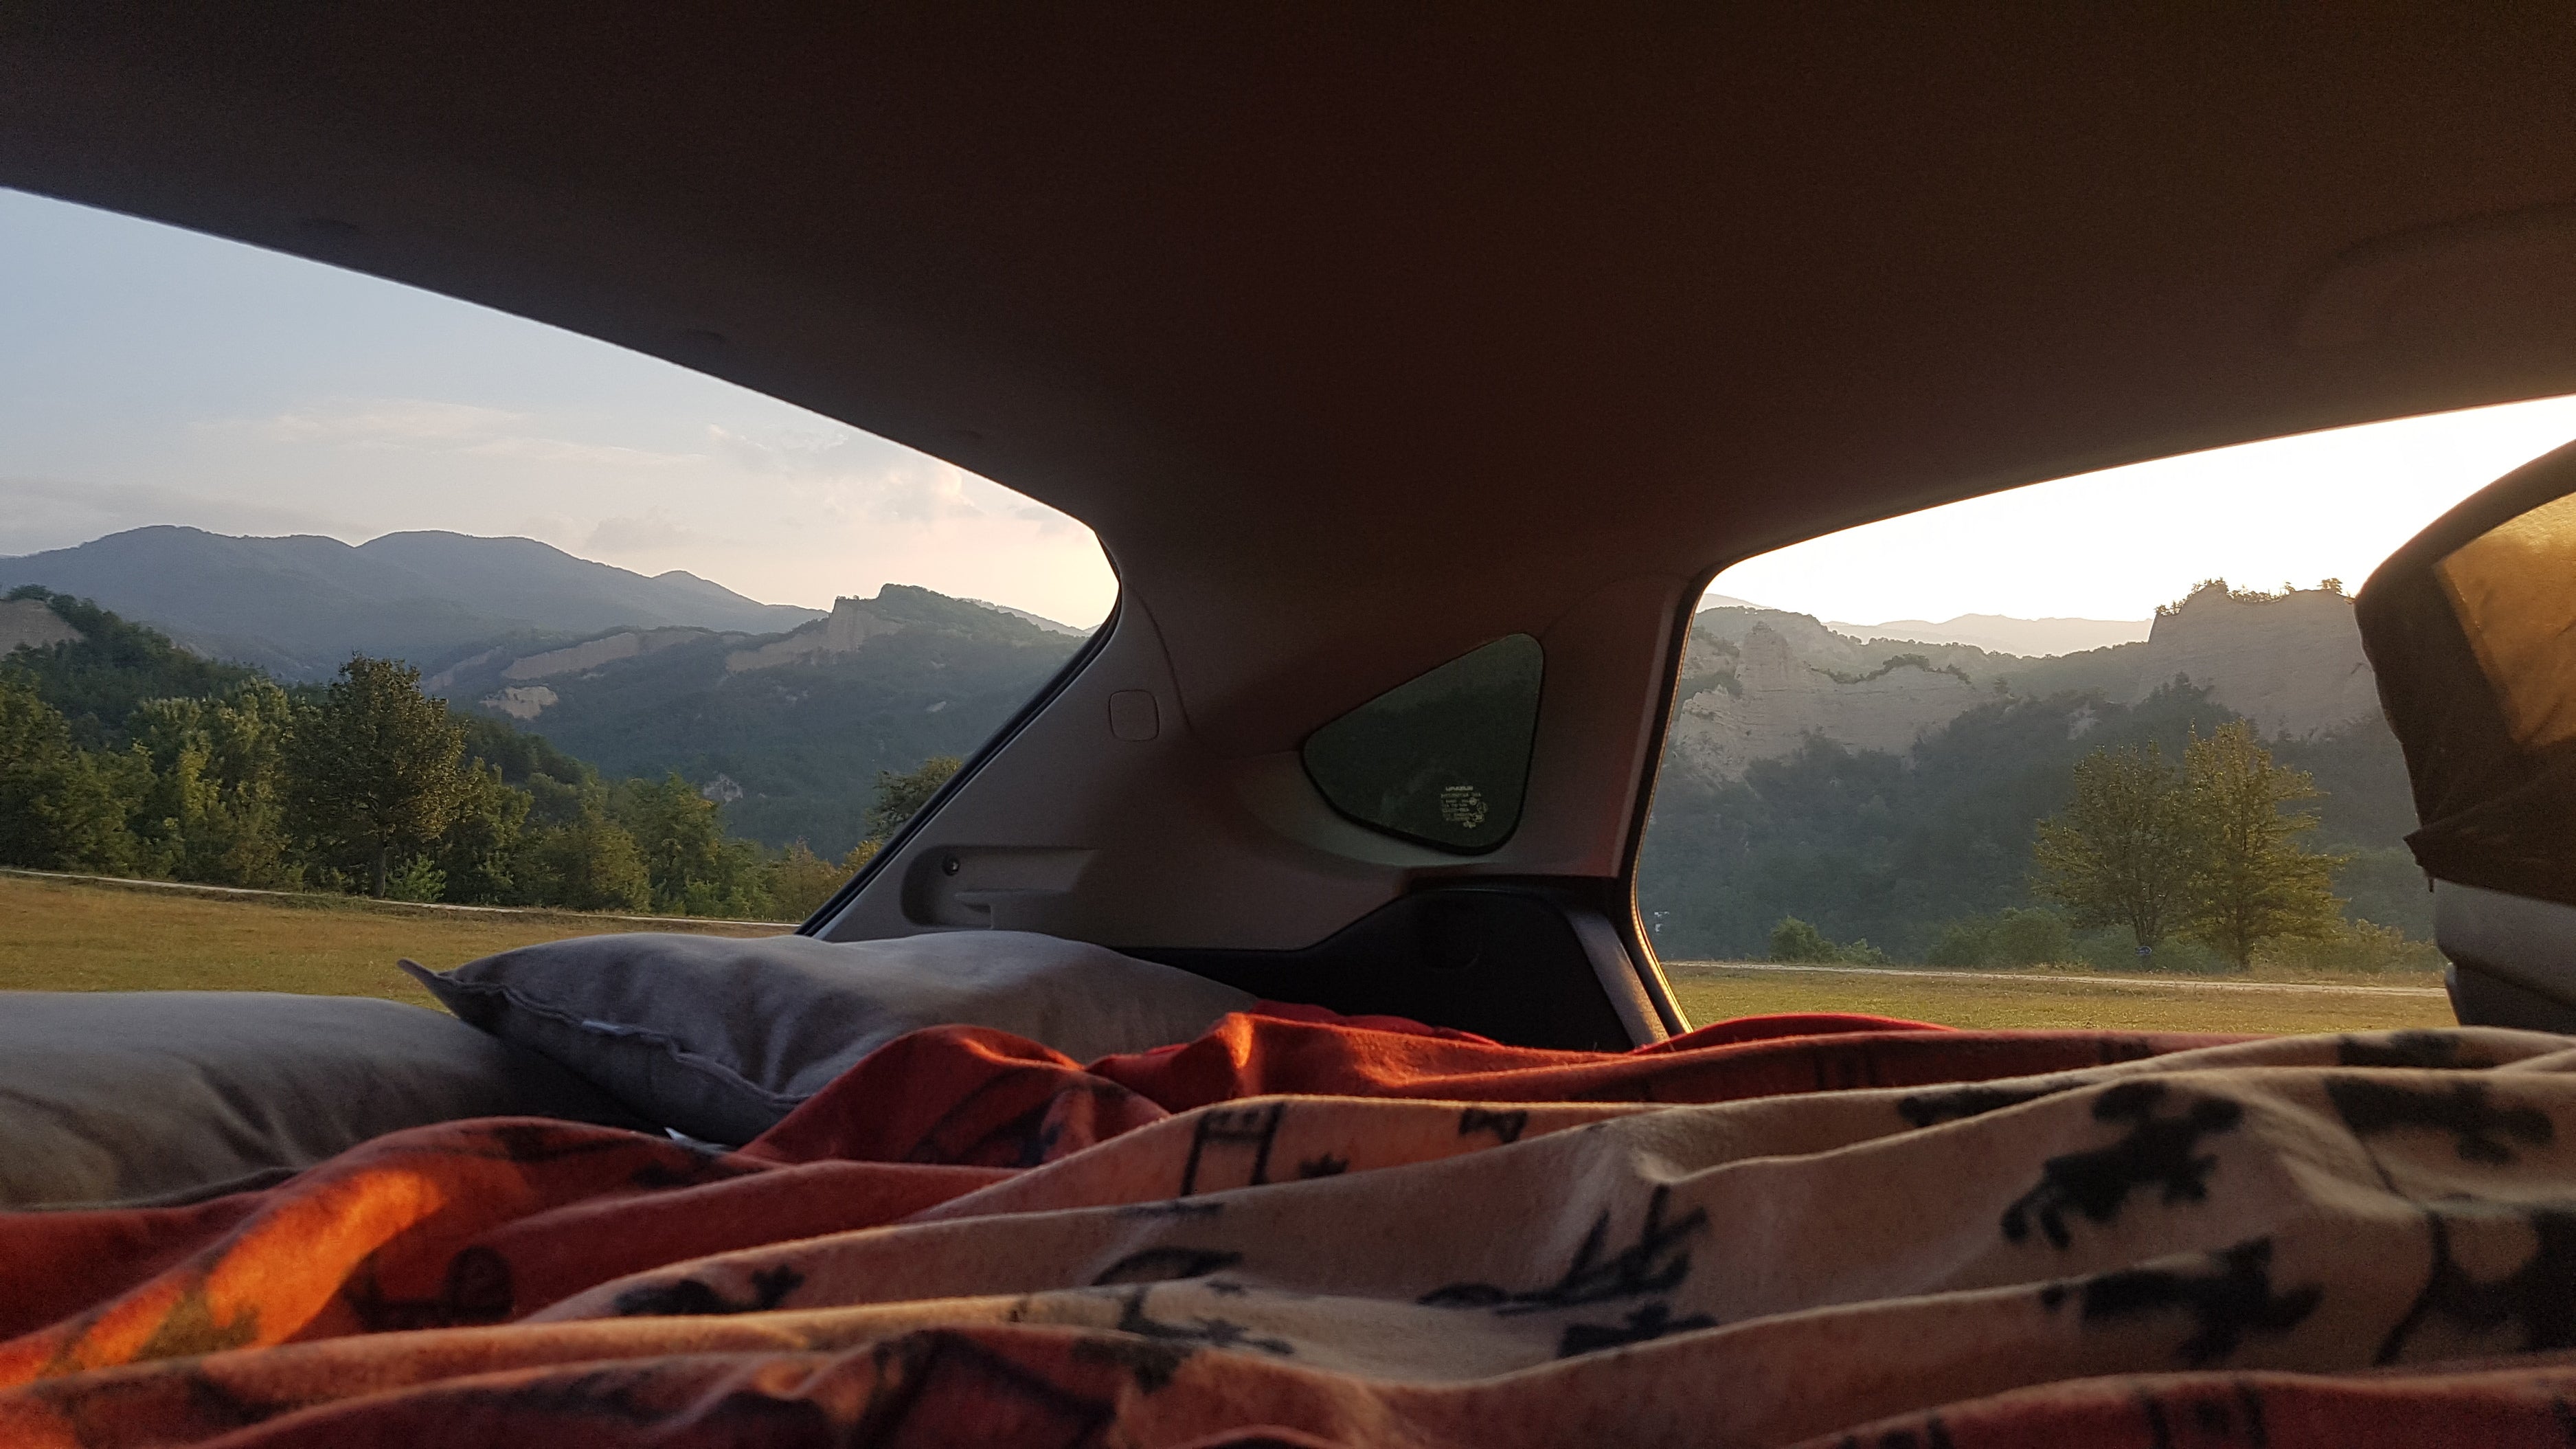 RAXO MONCK Campervan Modul - Omdan Din Bil til et Komfortabelt Hjem på Hjul